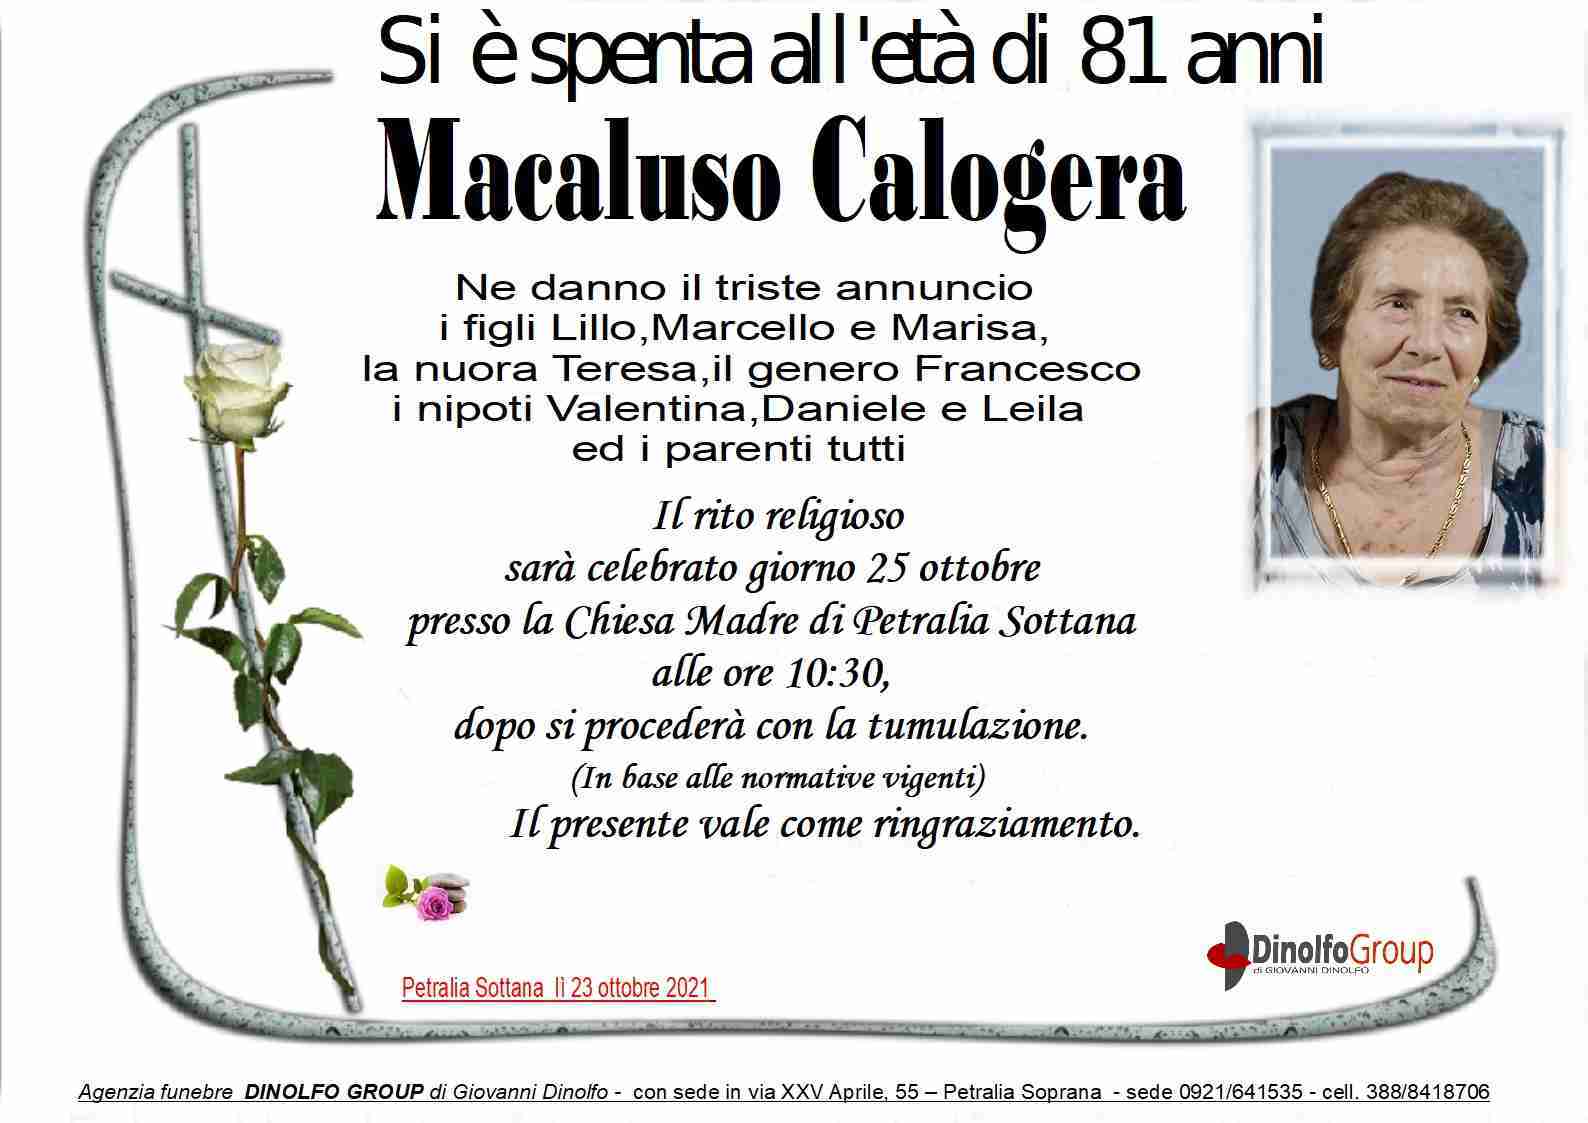 Calogera Macaluso